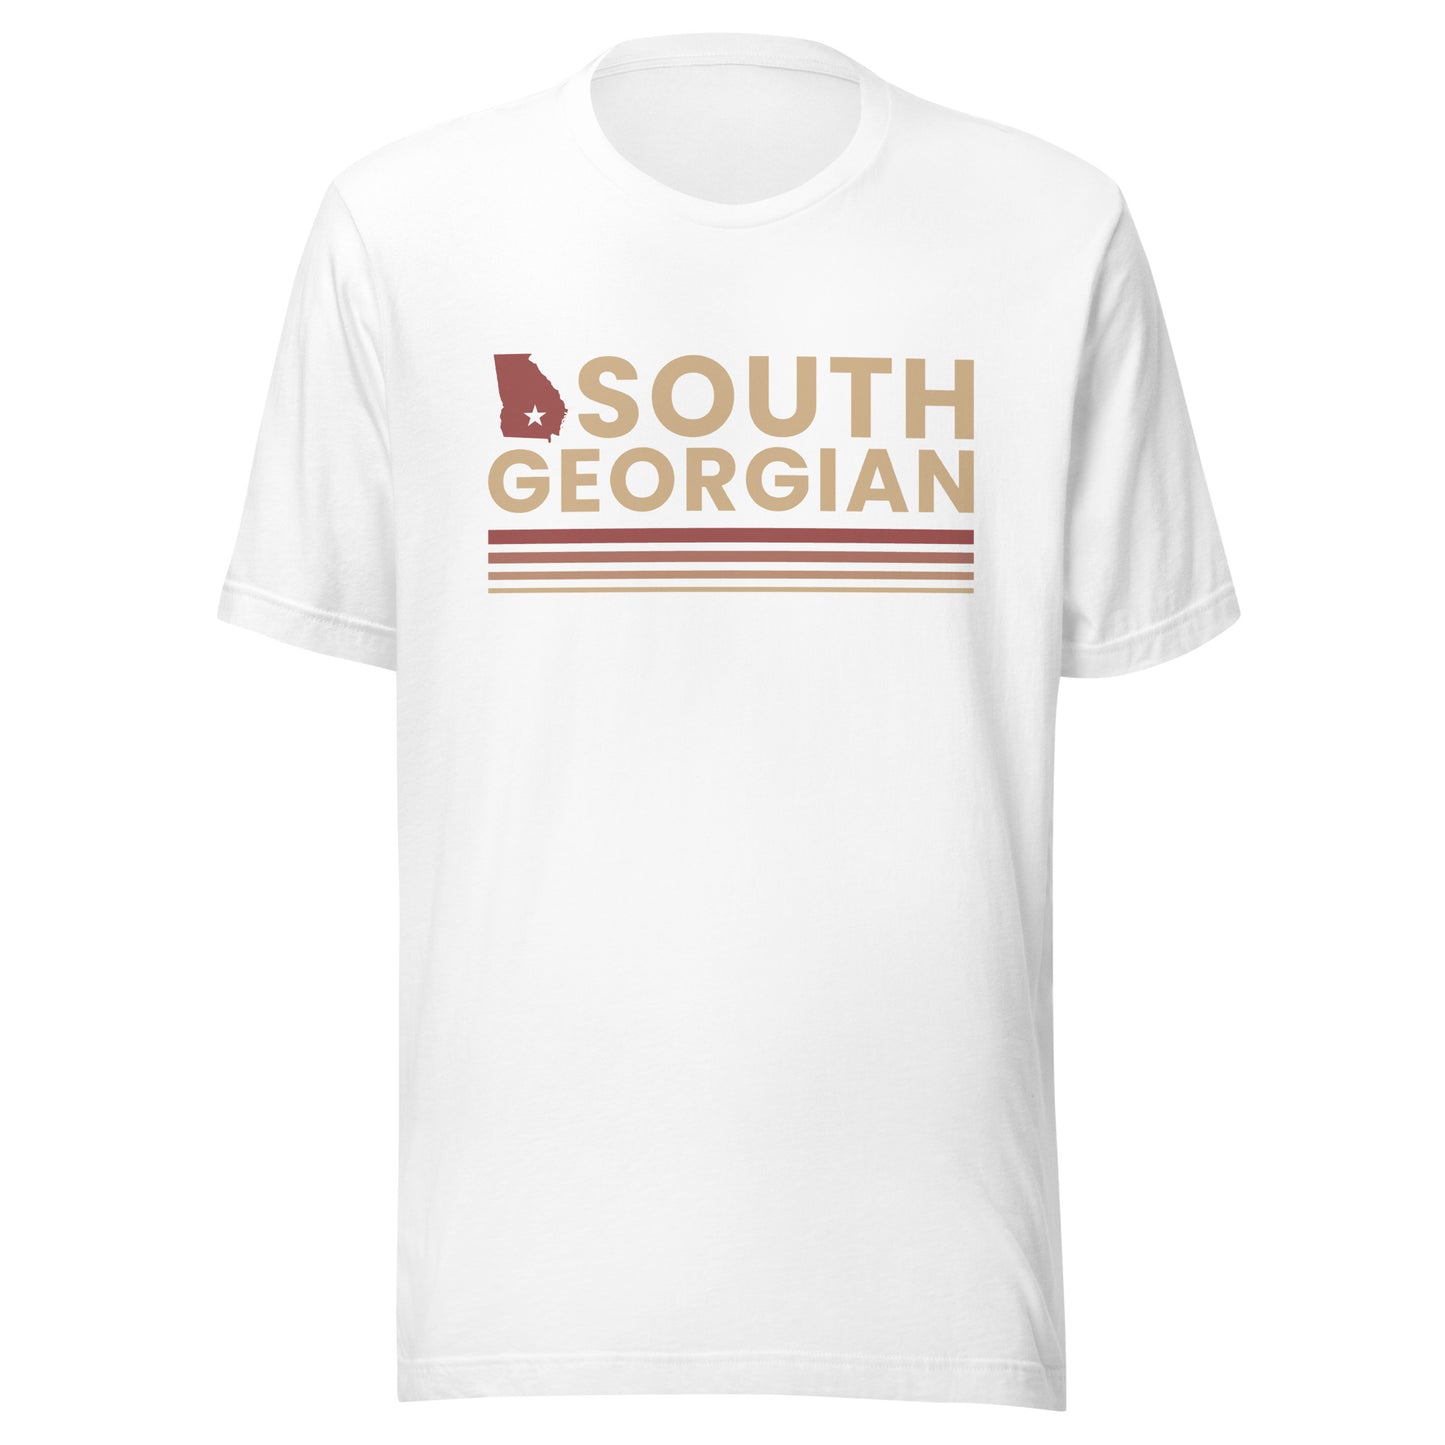 South Georgian Tee